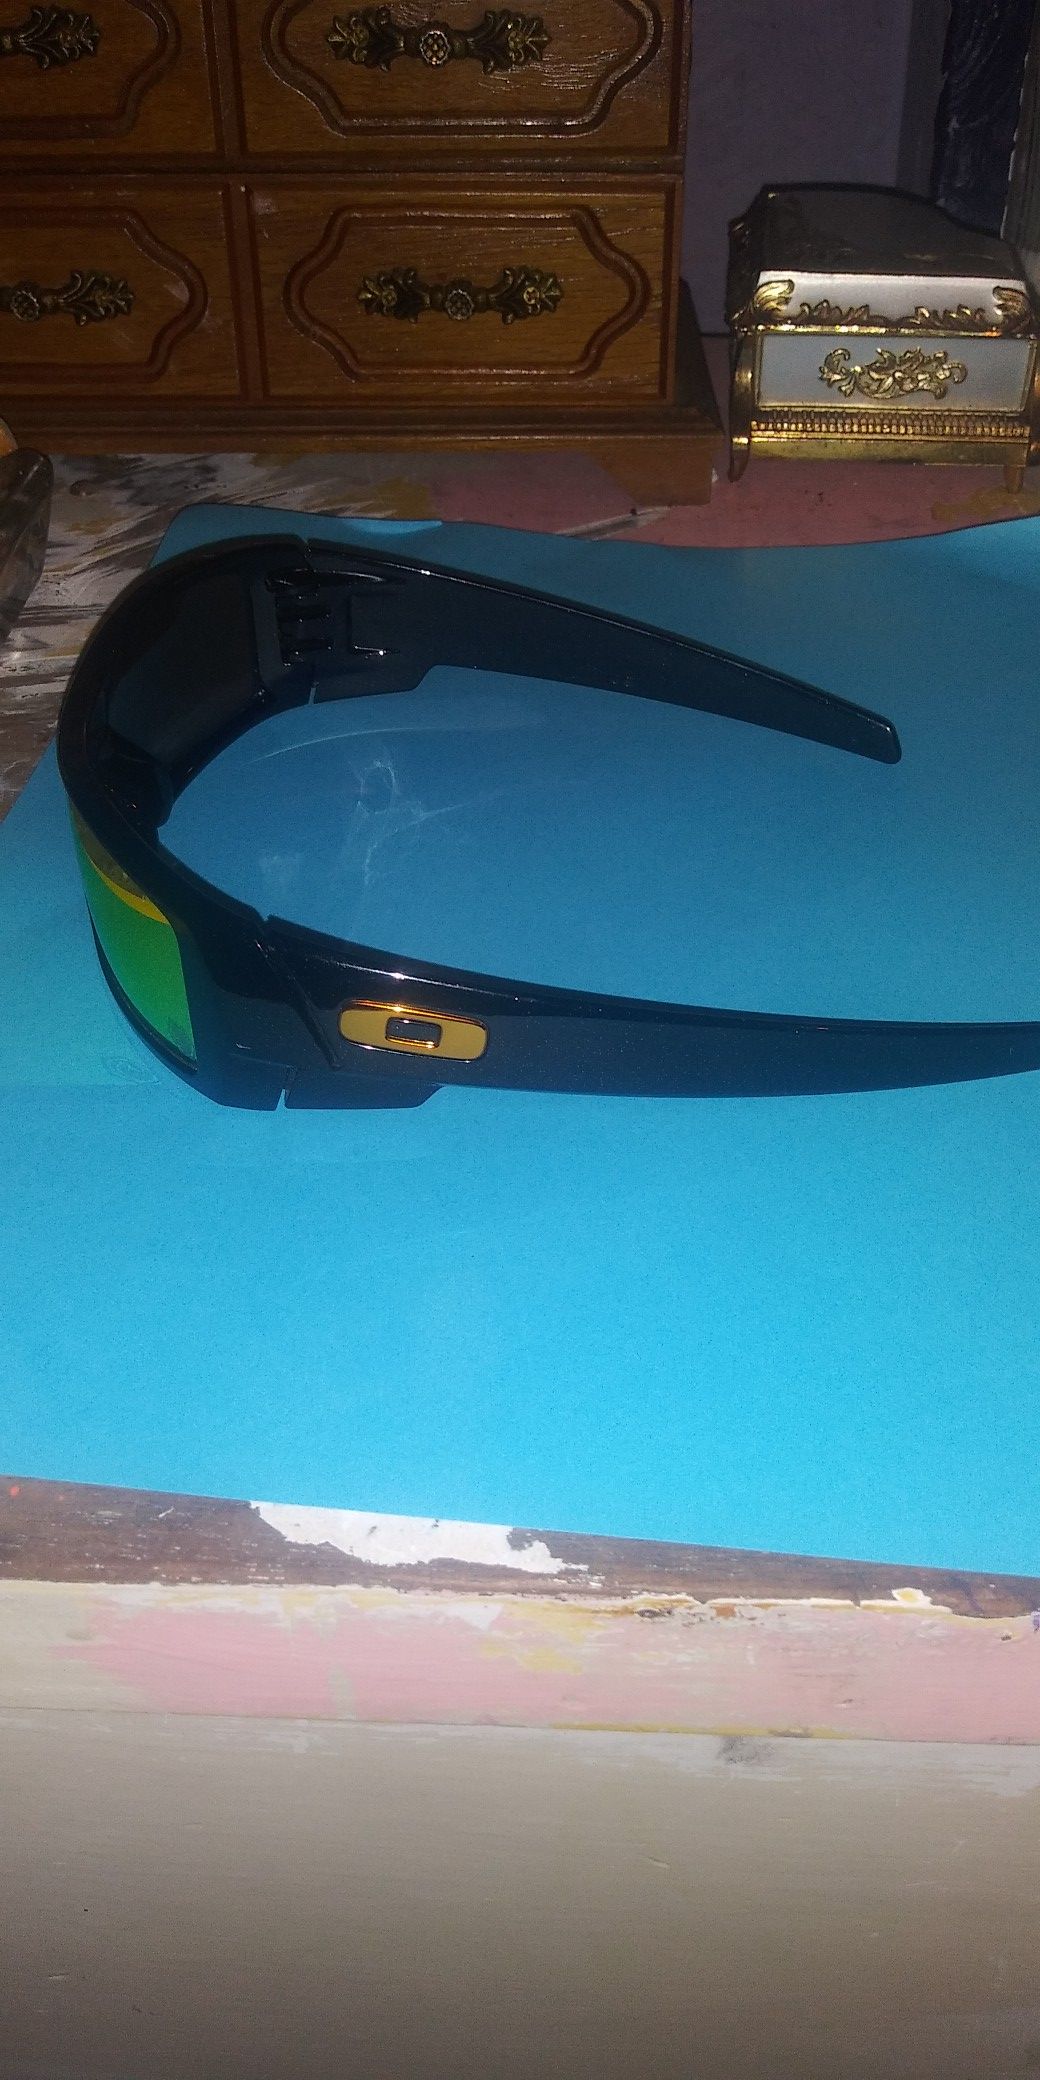 Oakley gascans sunglasses